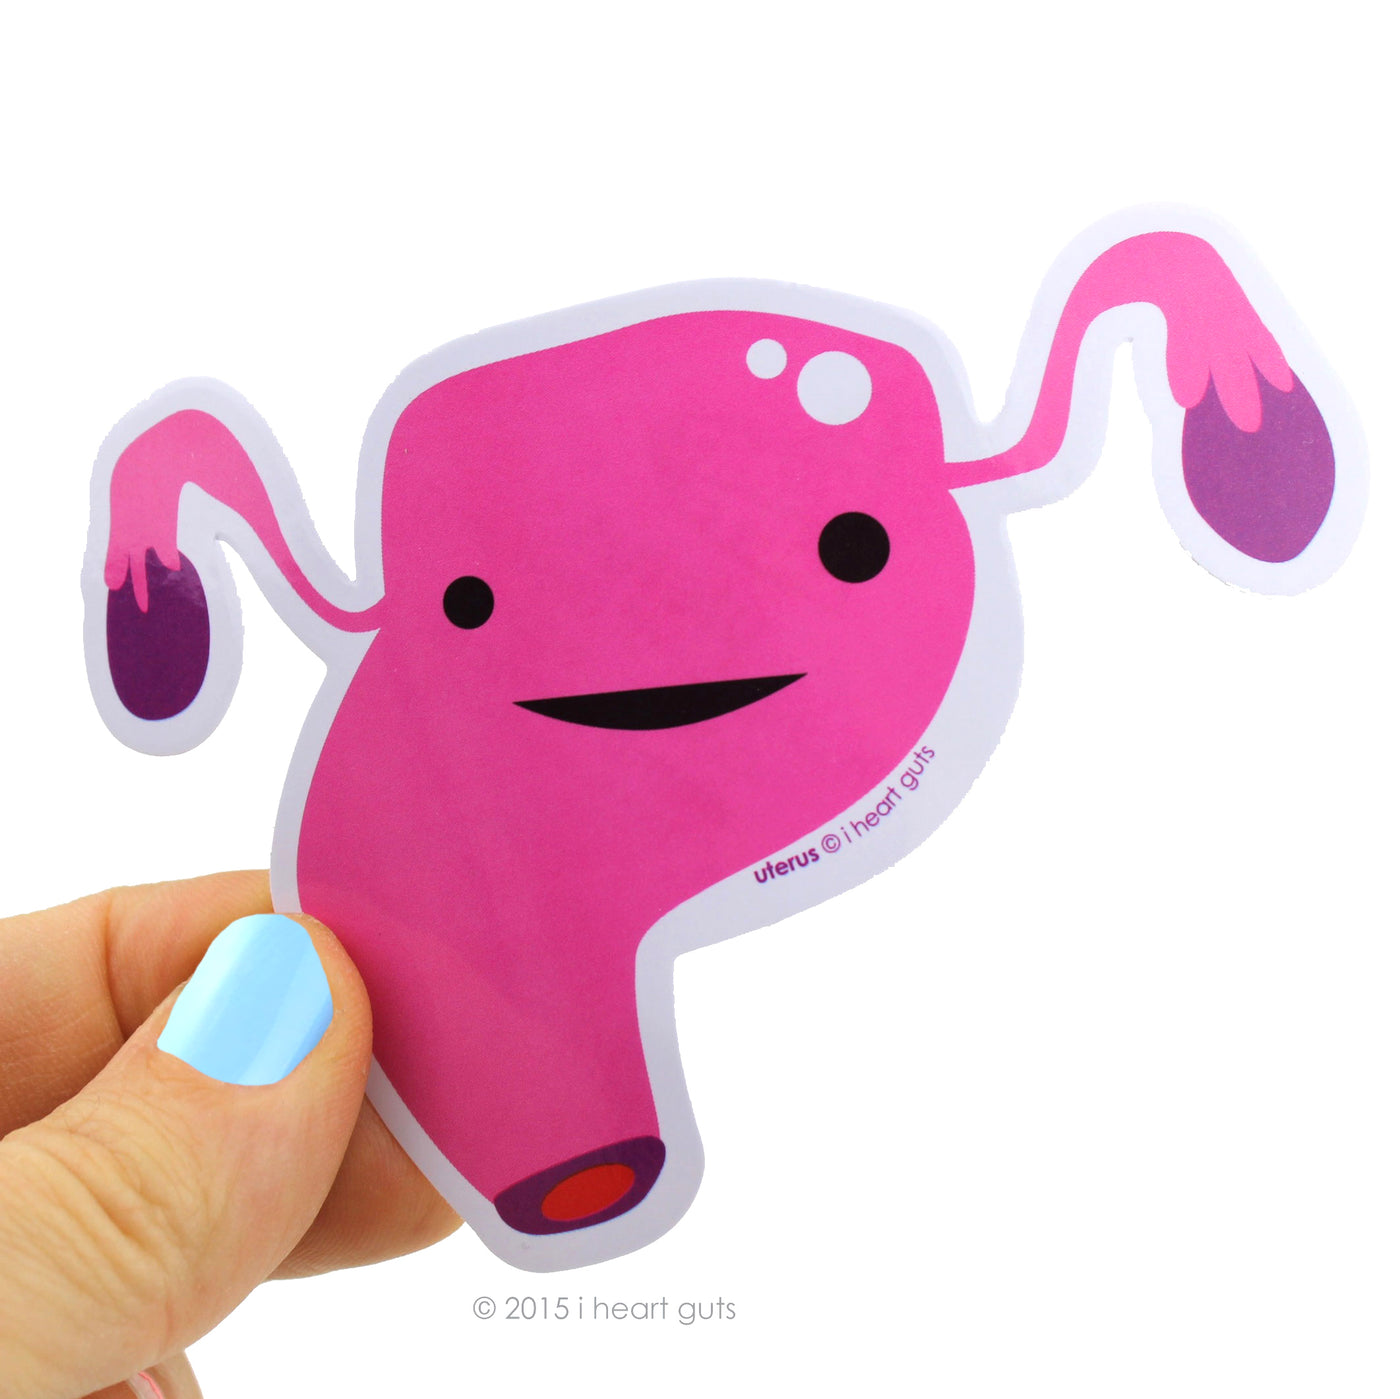 Uterus Stickers | Cute Uterus Stickers - Funny Uterus Stickers to Share